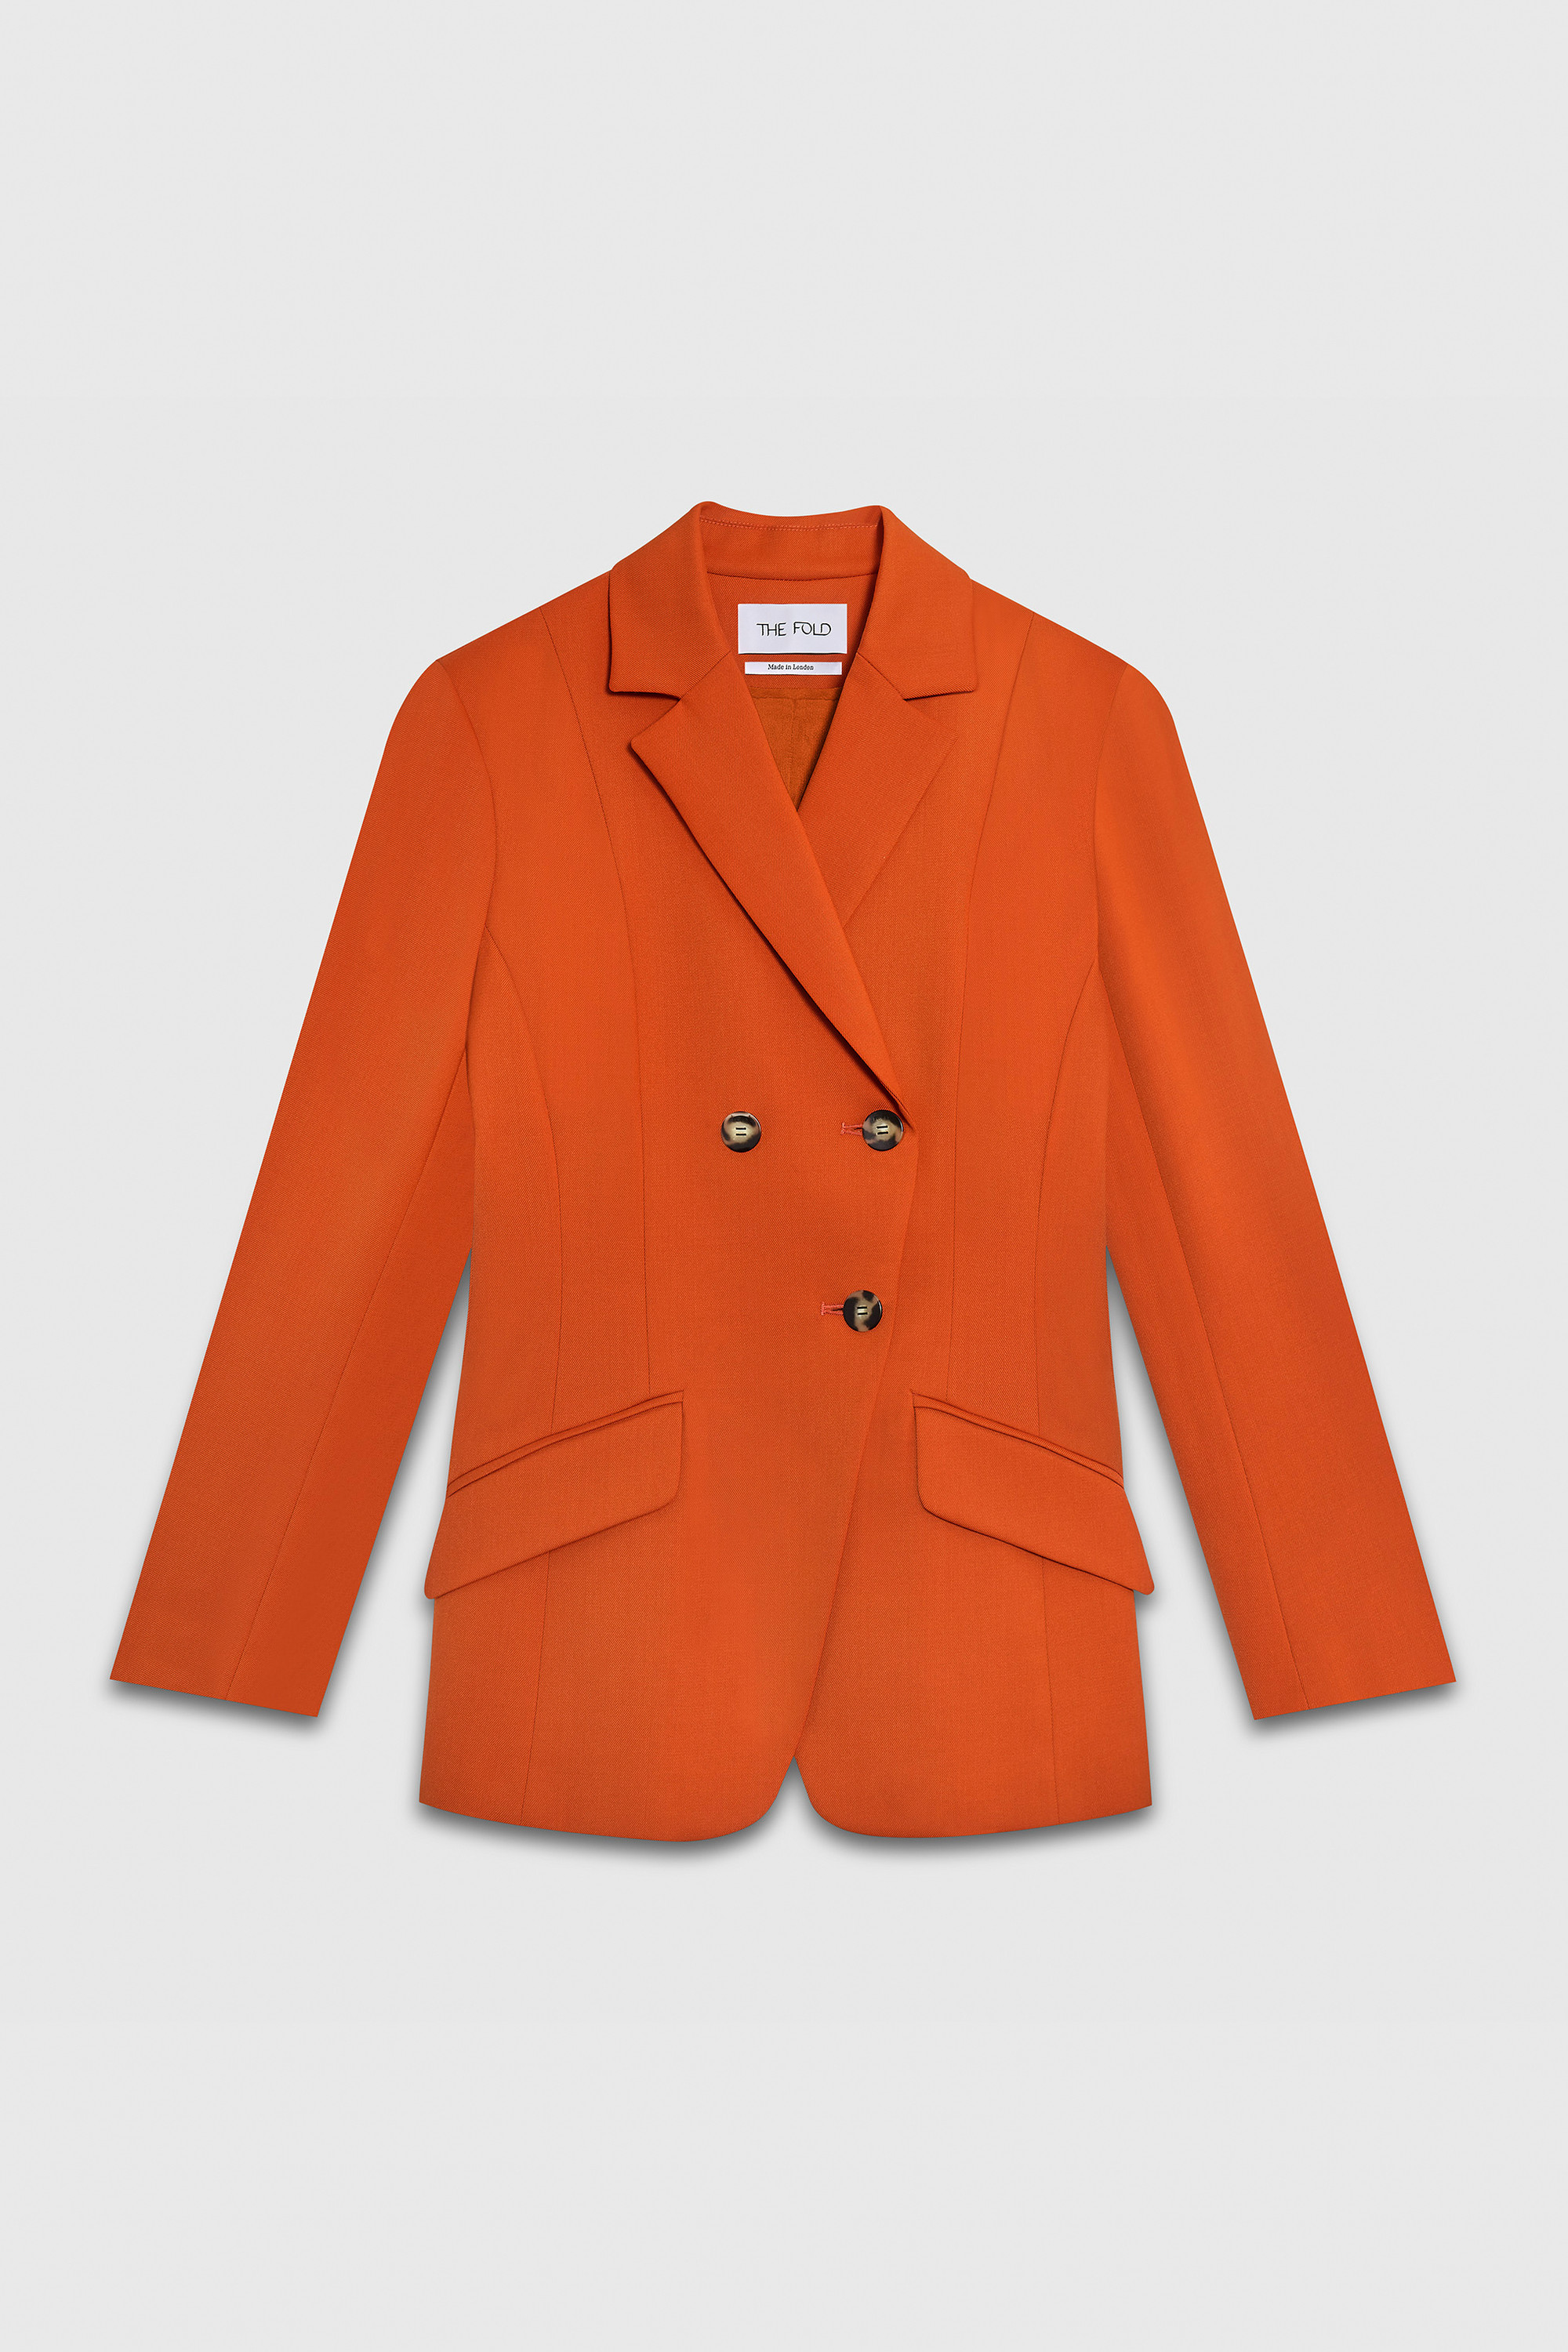 Abbeville Jacket Burnt Orange Wool Blend - Welcome to the Fold LTD